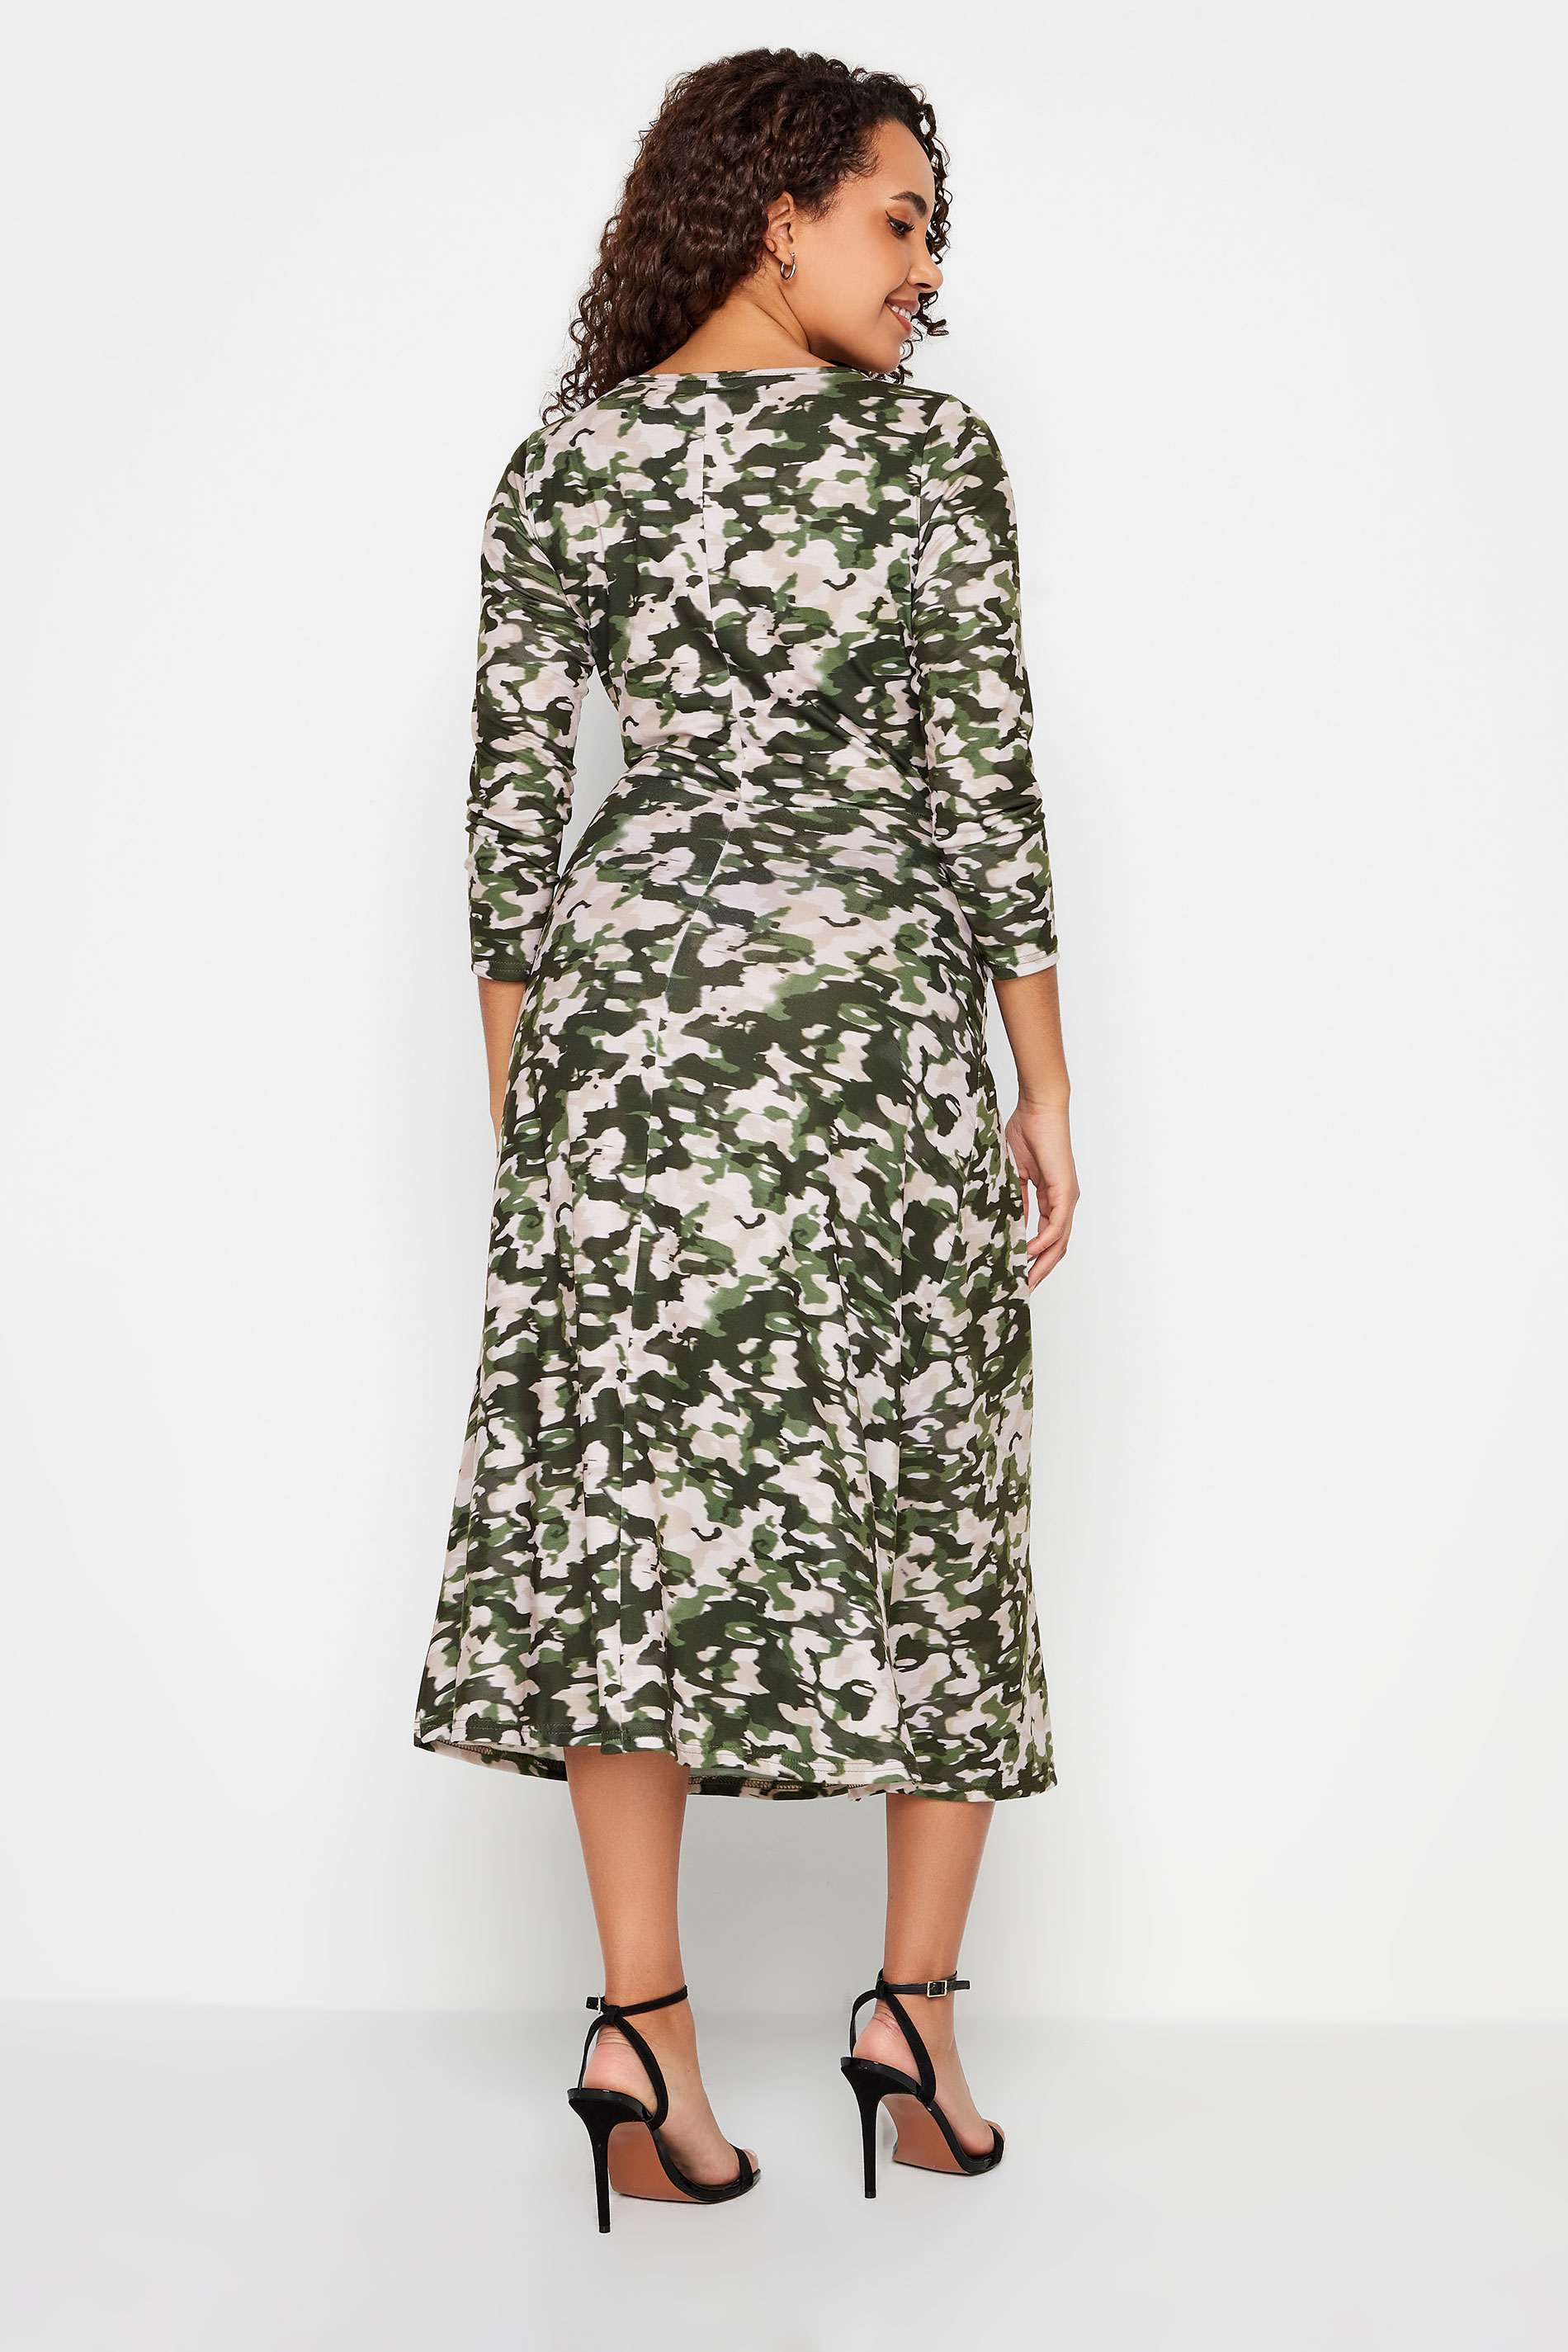 M&Co Khaki Green Camo Print Twist Front Midaxi Dress | M&Co 3